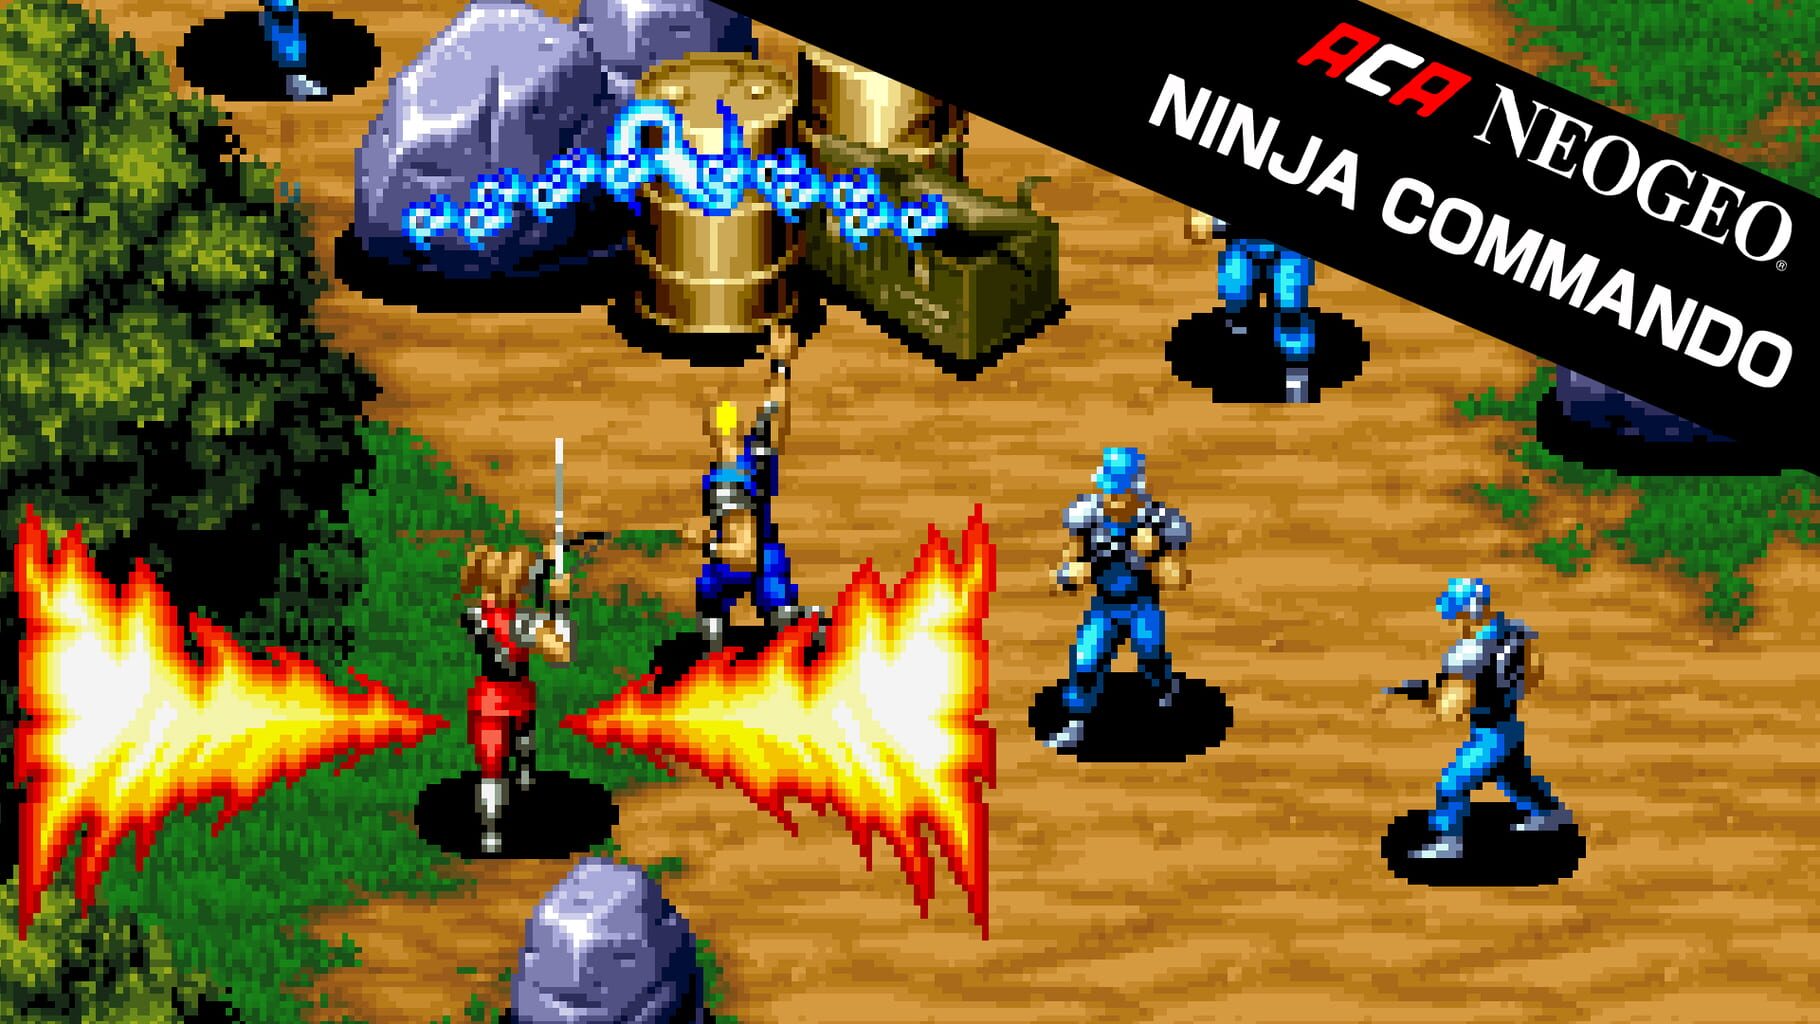 ACA Neo Geo: Ninja Commando artwork